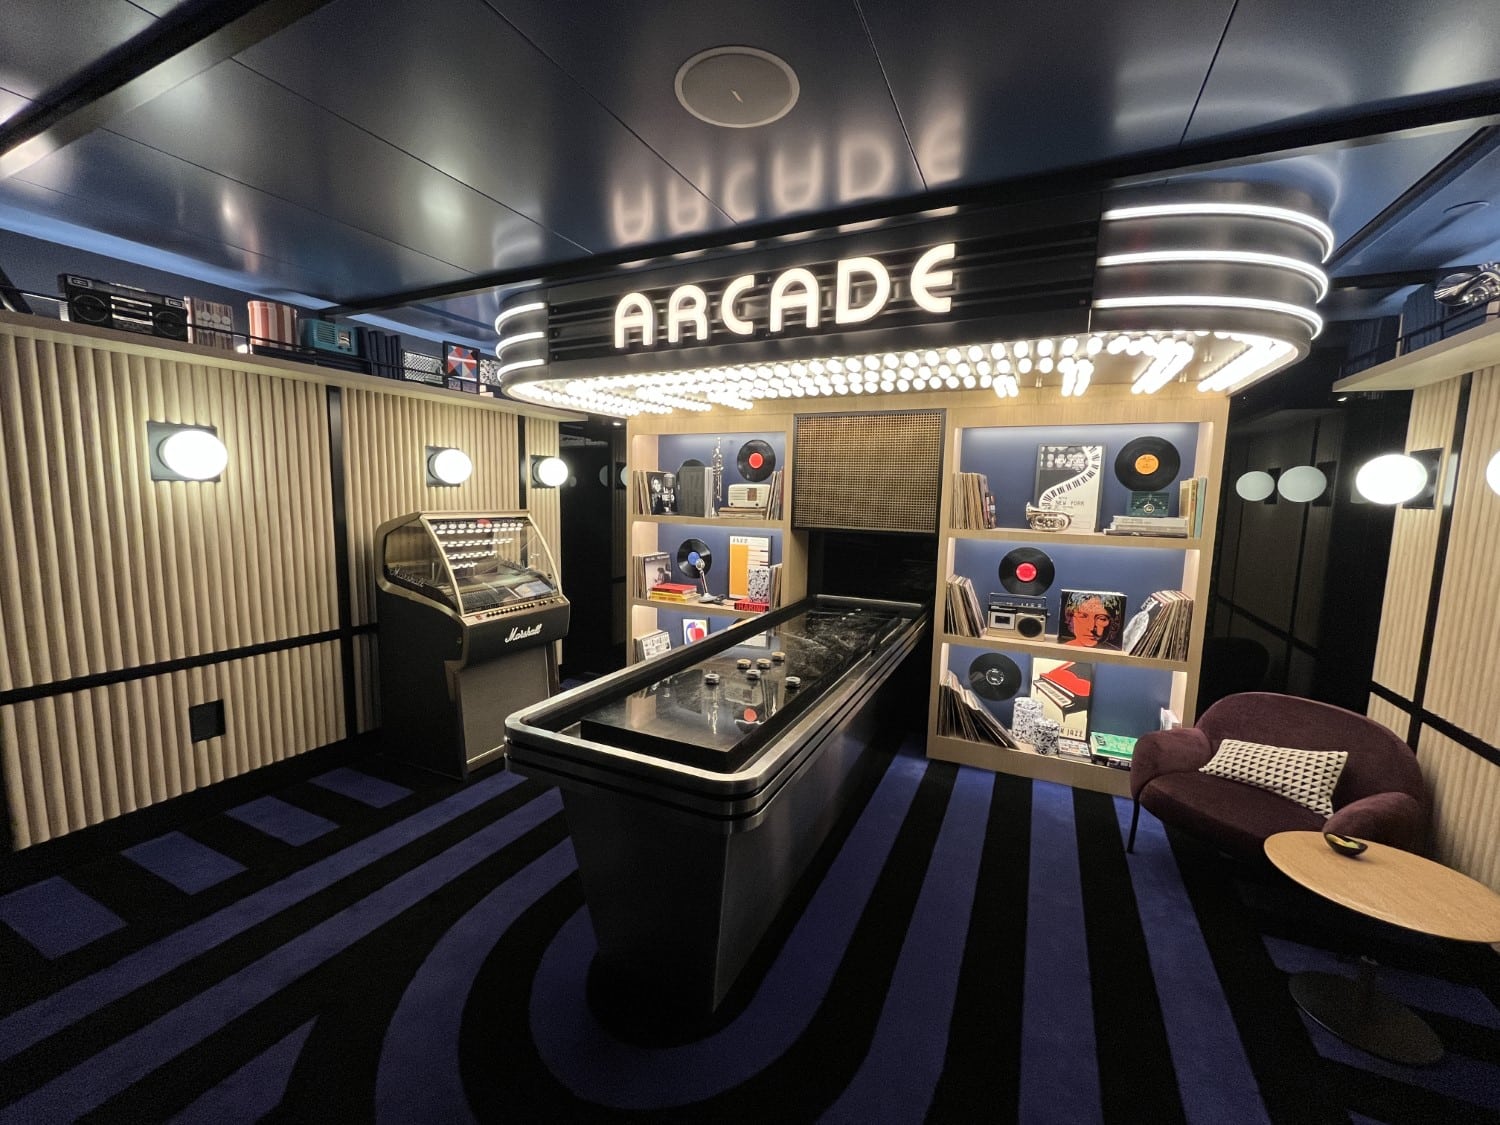 chase sapphire lounge laguardia airport arcade